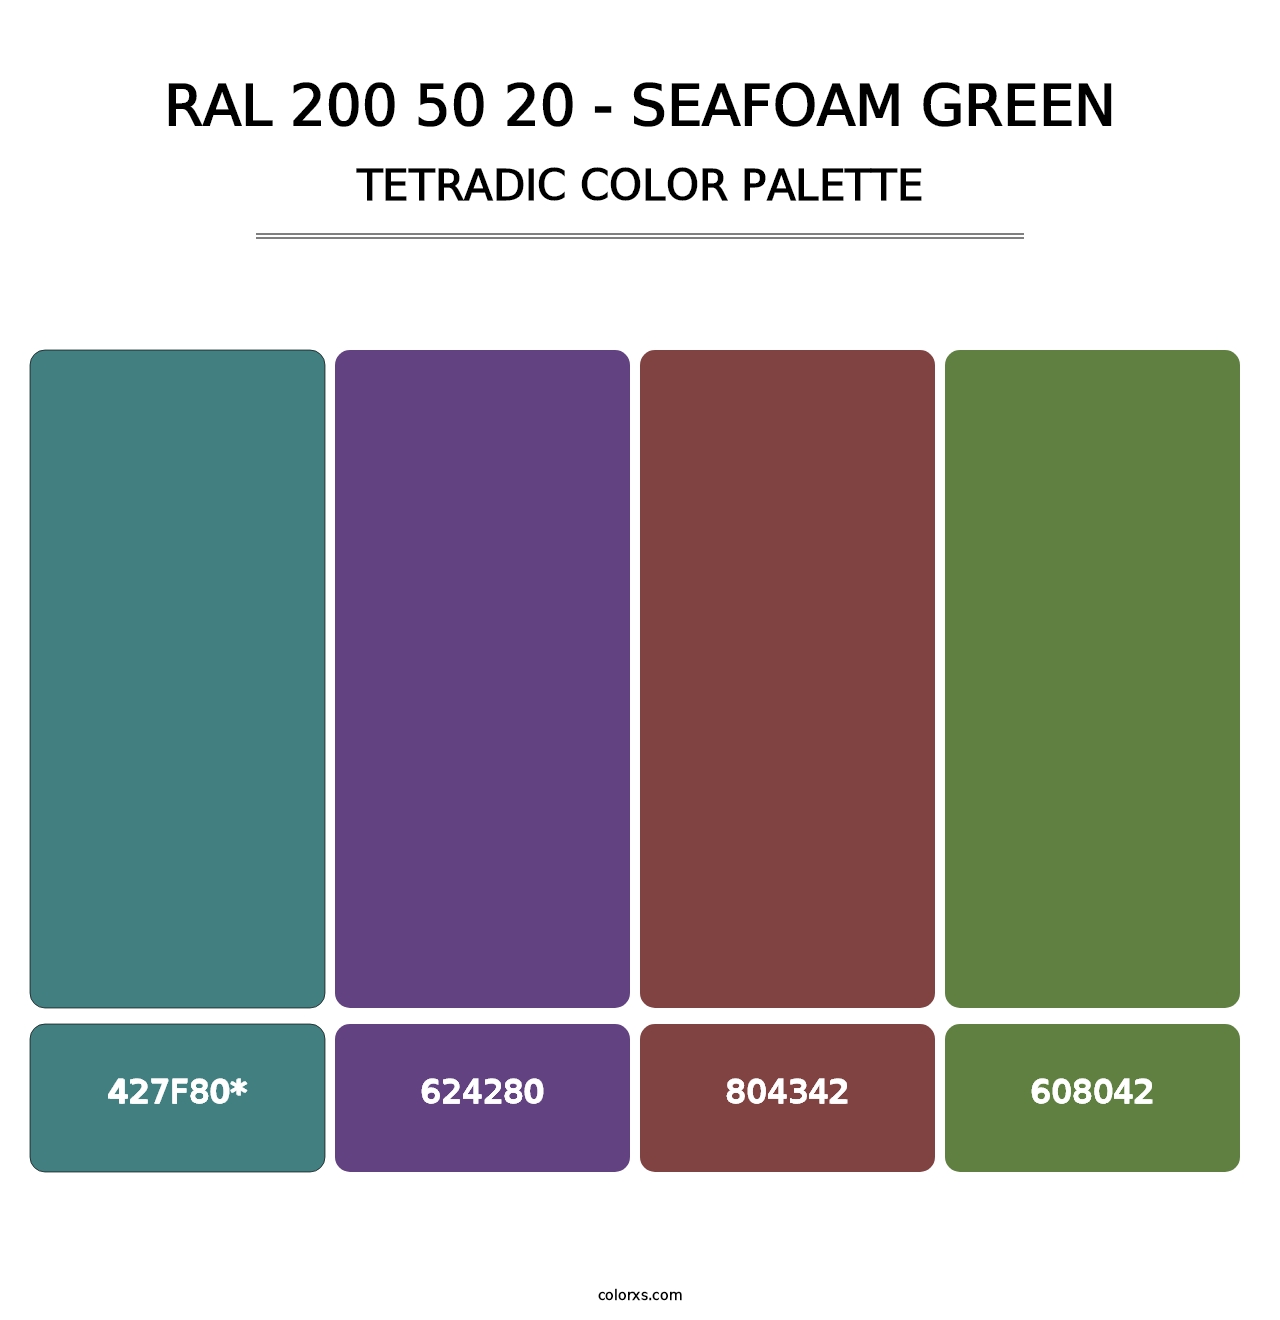 RAL 200 50 20 - Seafoam Green - Tetradic Color Palette